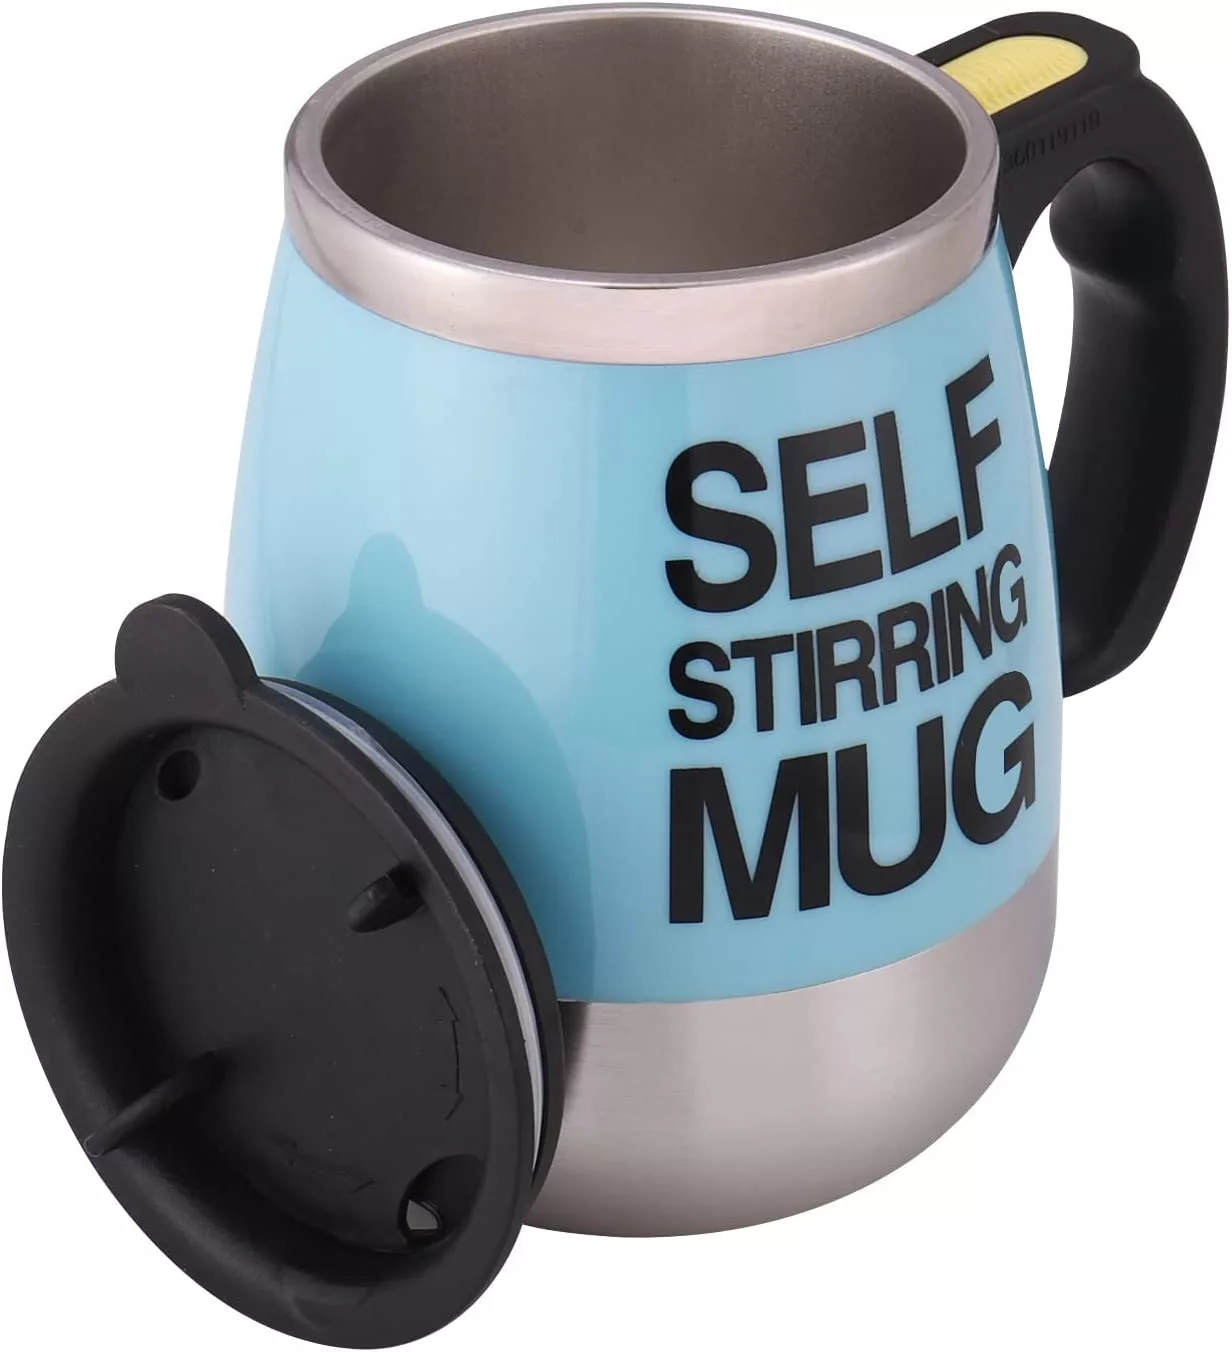 Self Stirring Coffee Mug Product Shot